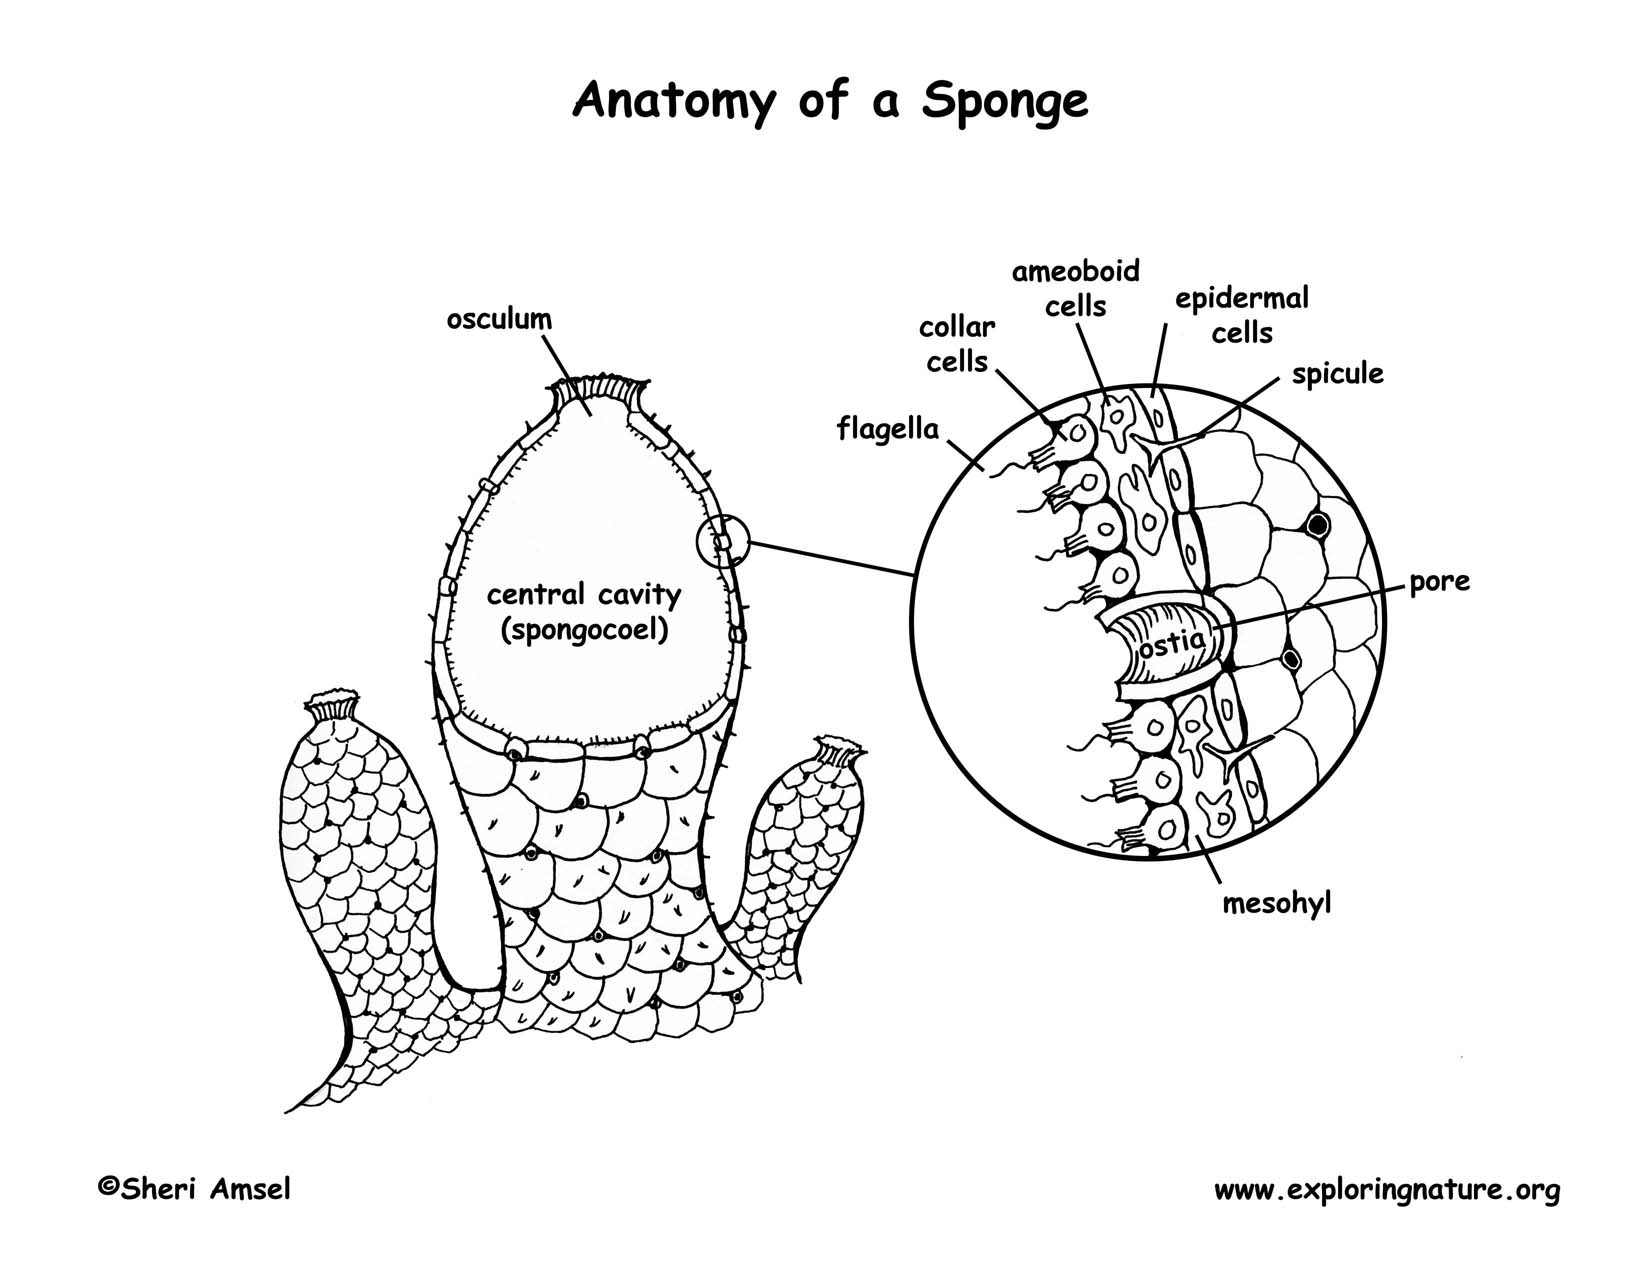 Phylum - Porifera (Sponges)